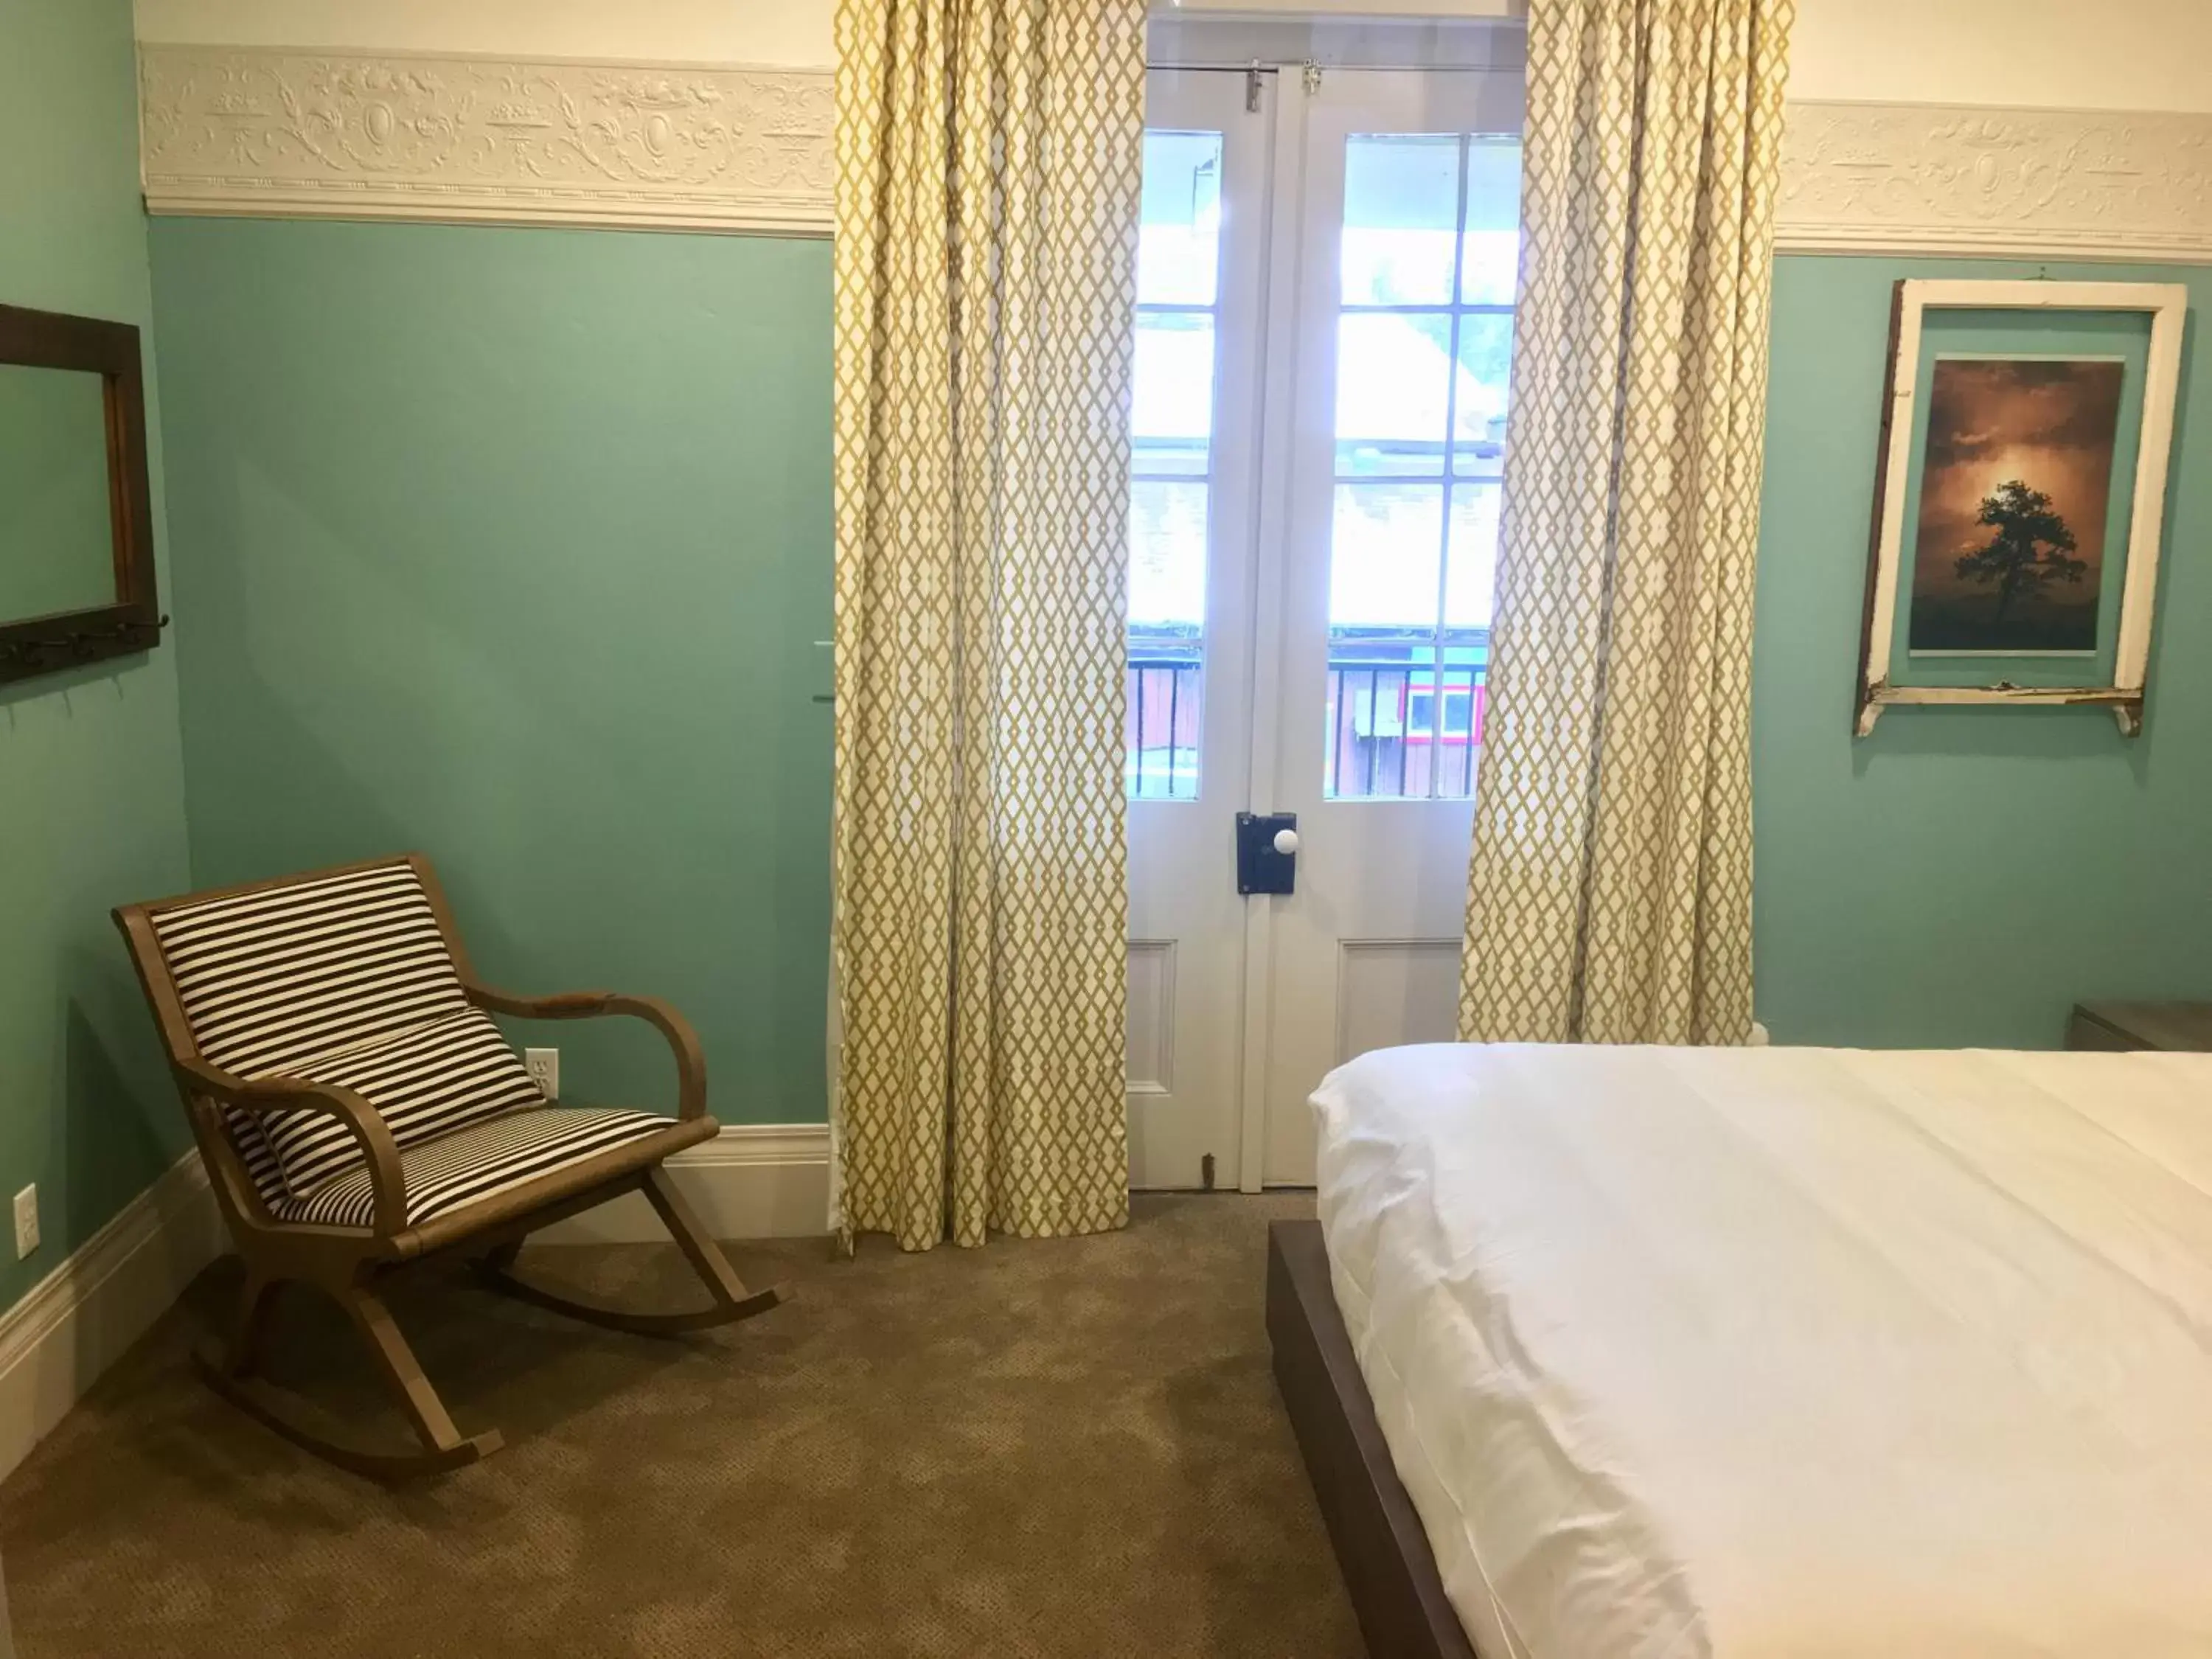 Bedroom in The Groveland Hotel